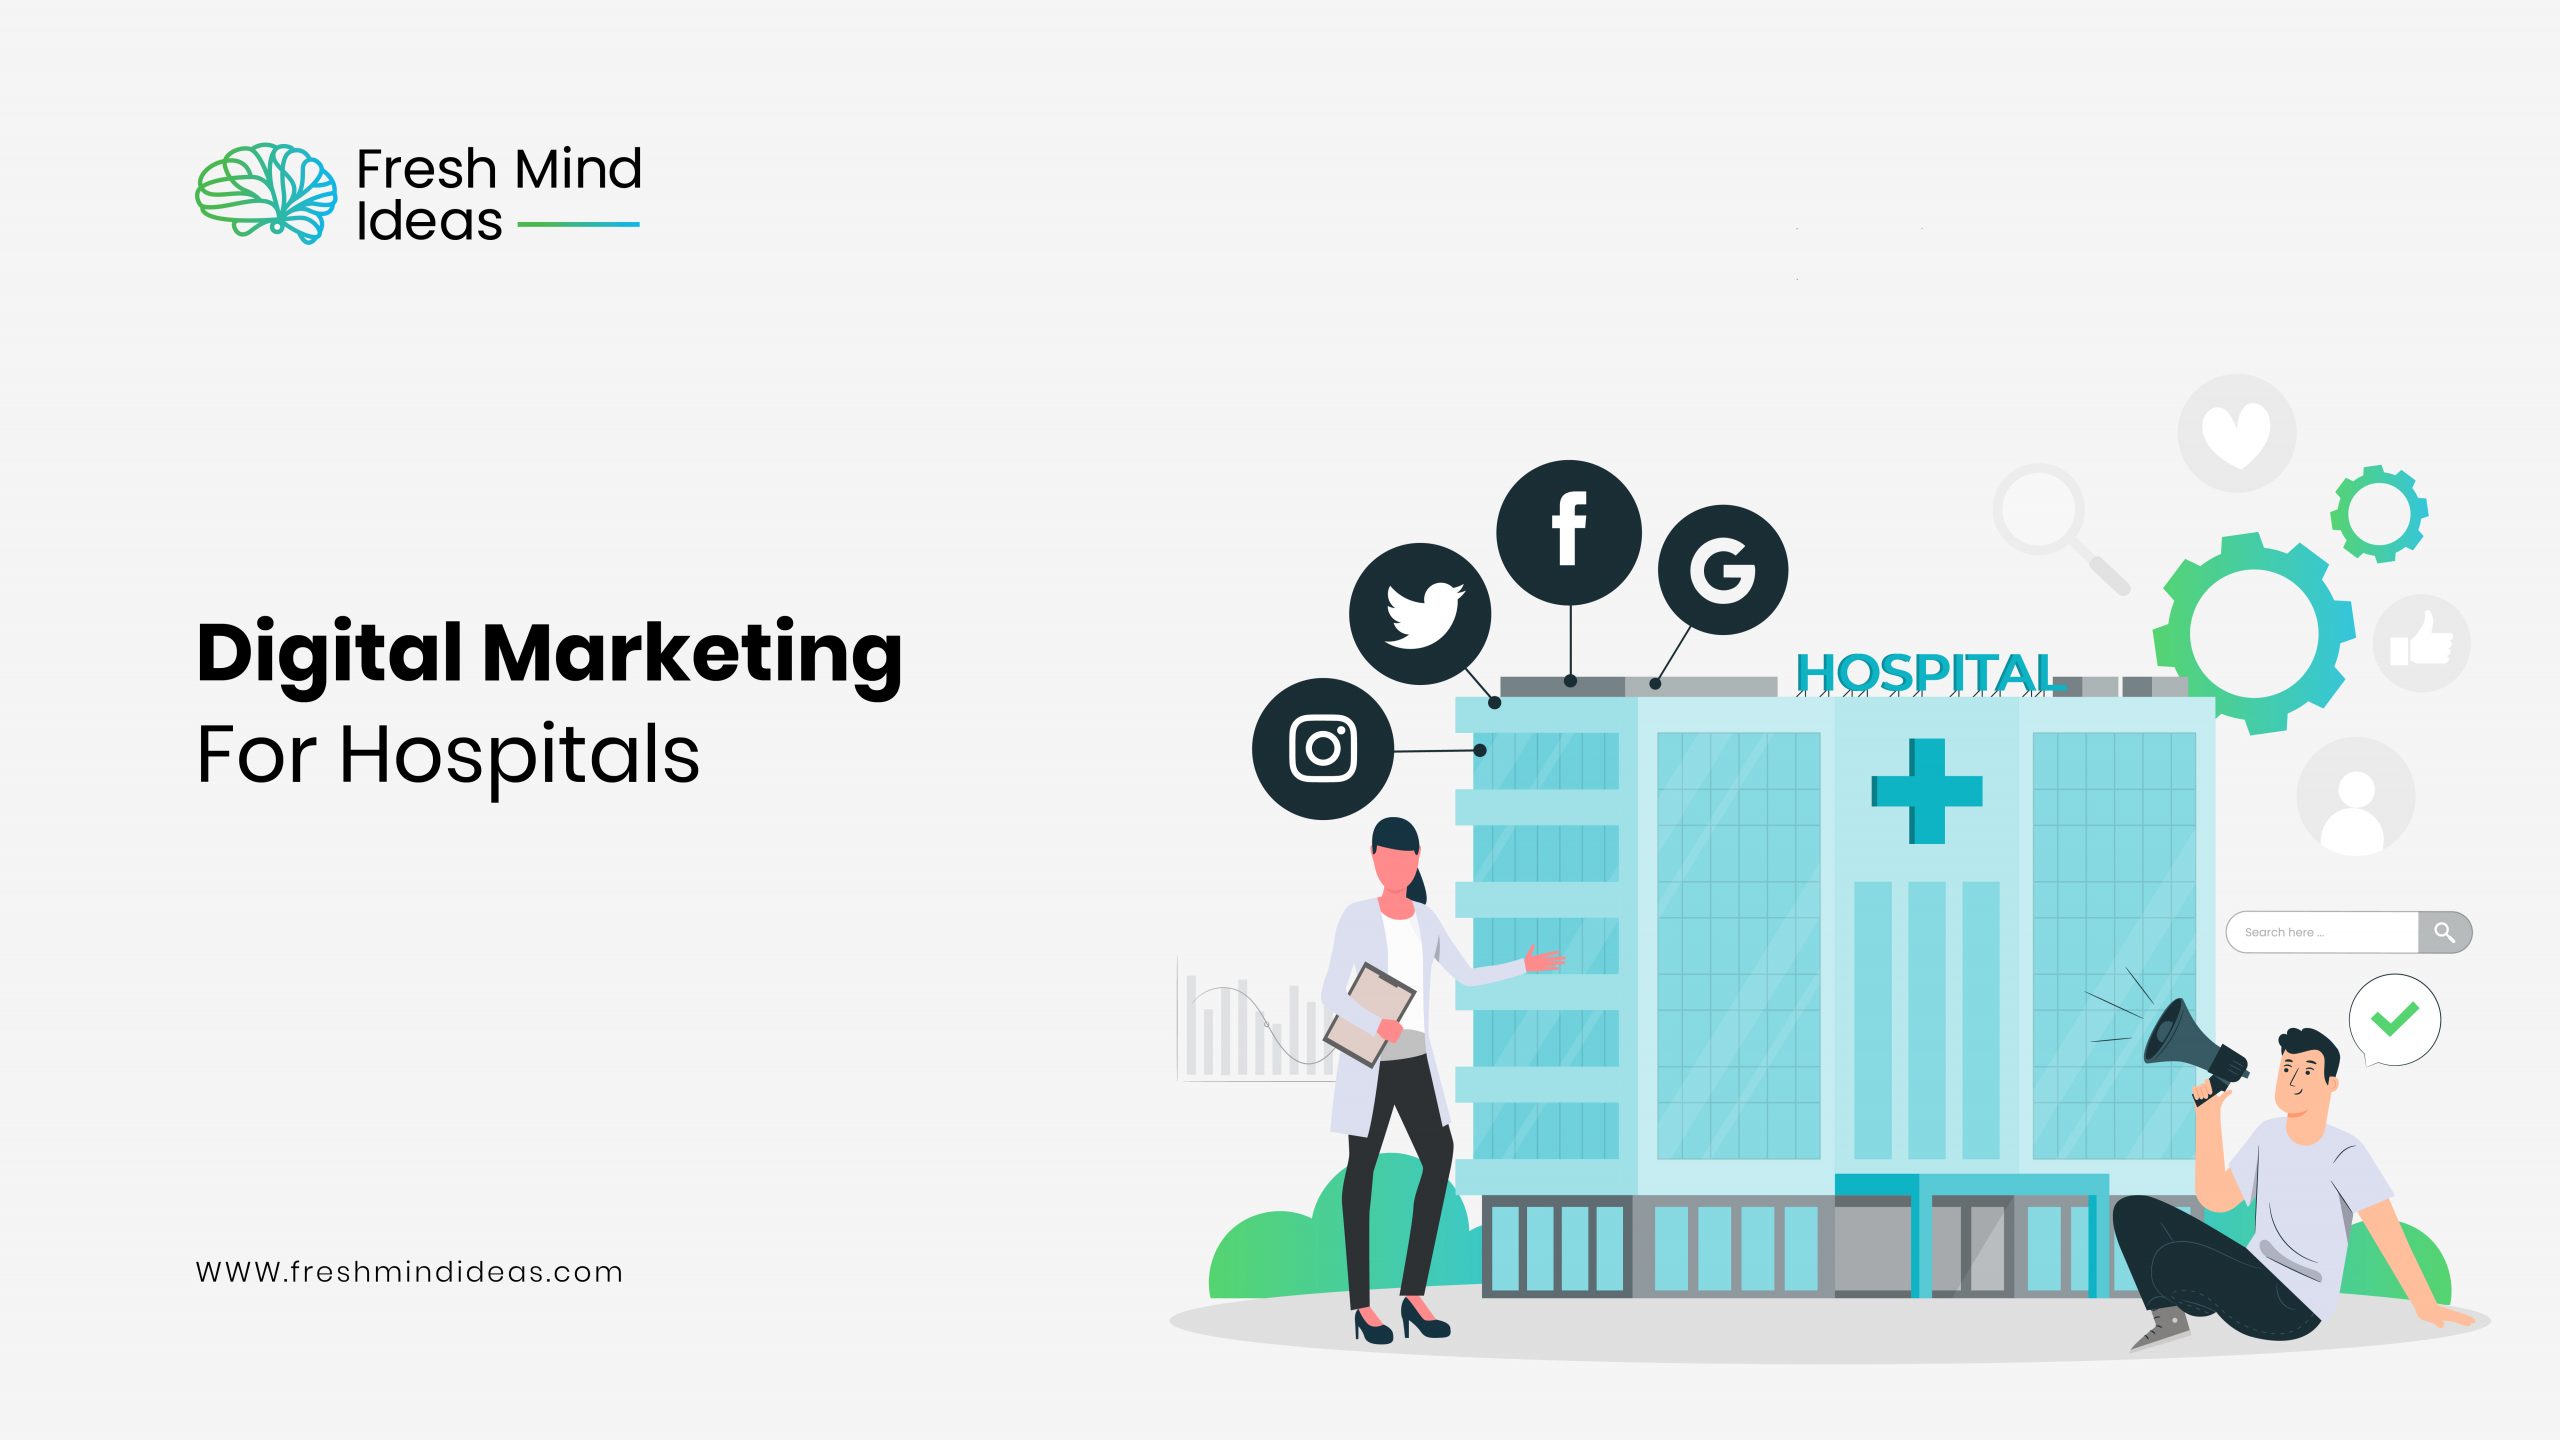 Digital Marketing for Hospitals